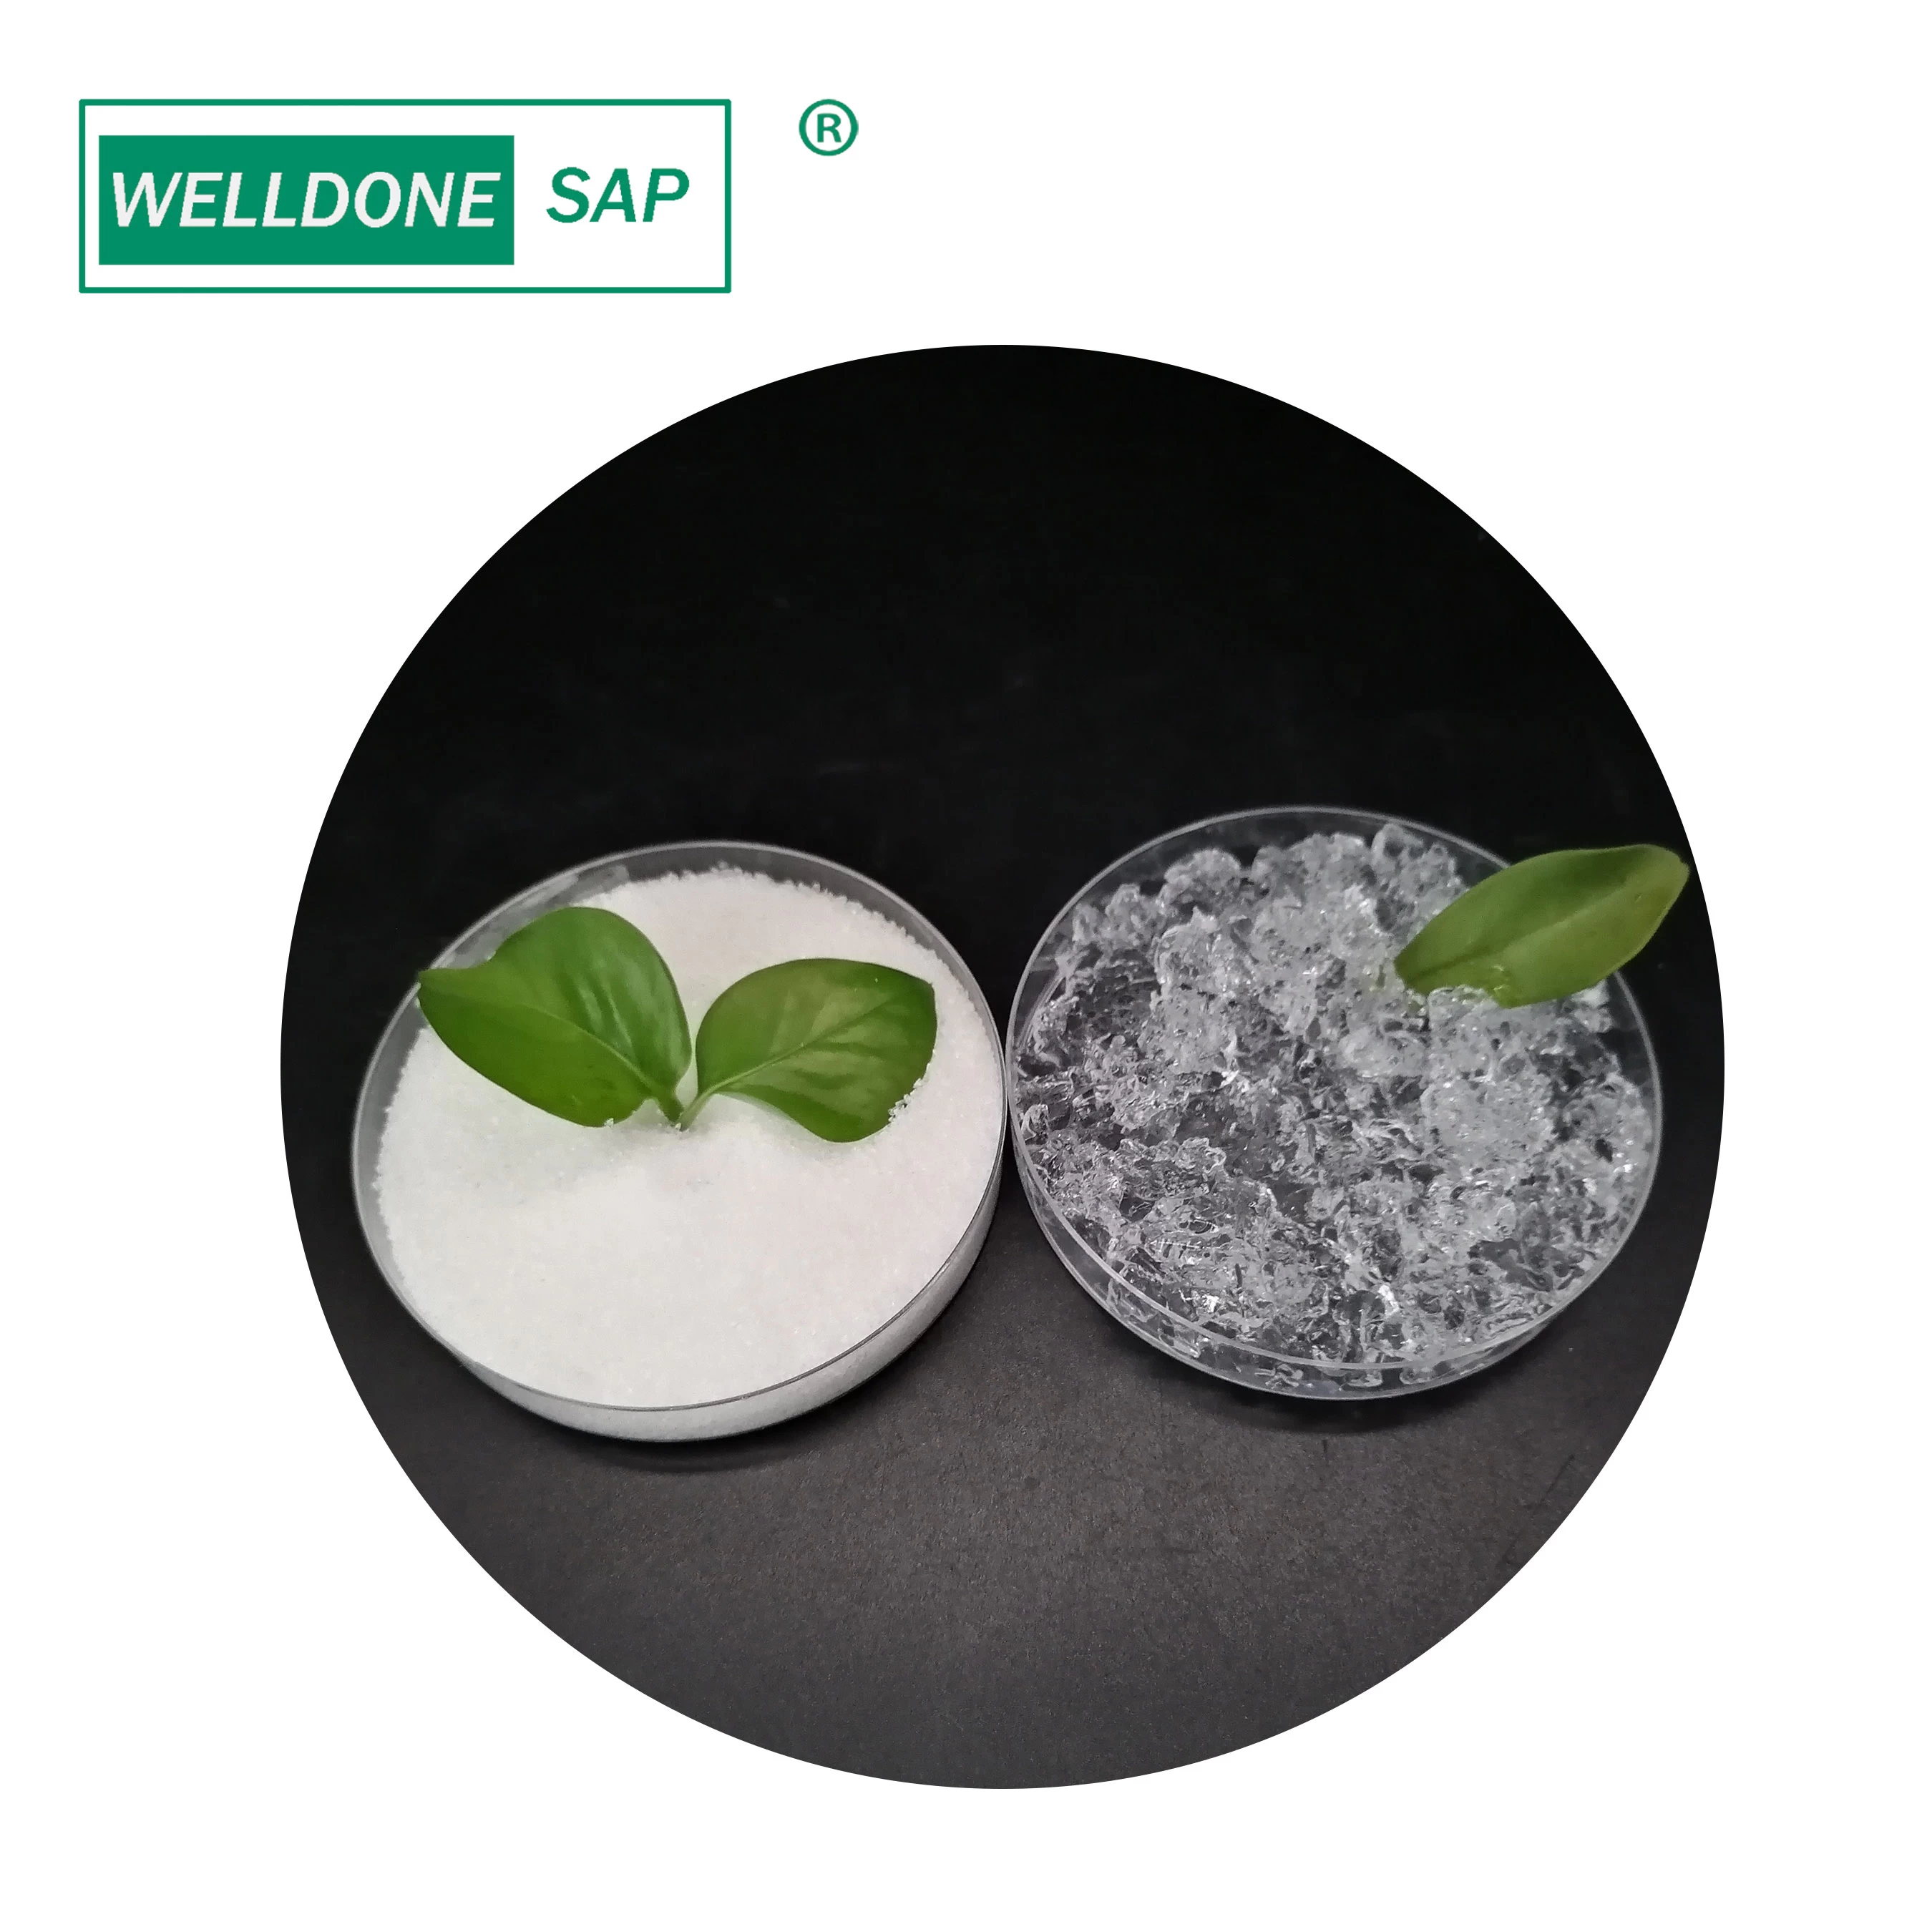 SAP per seme di avocado